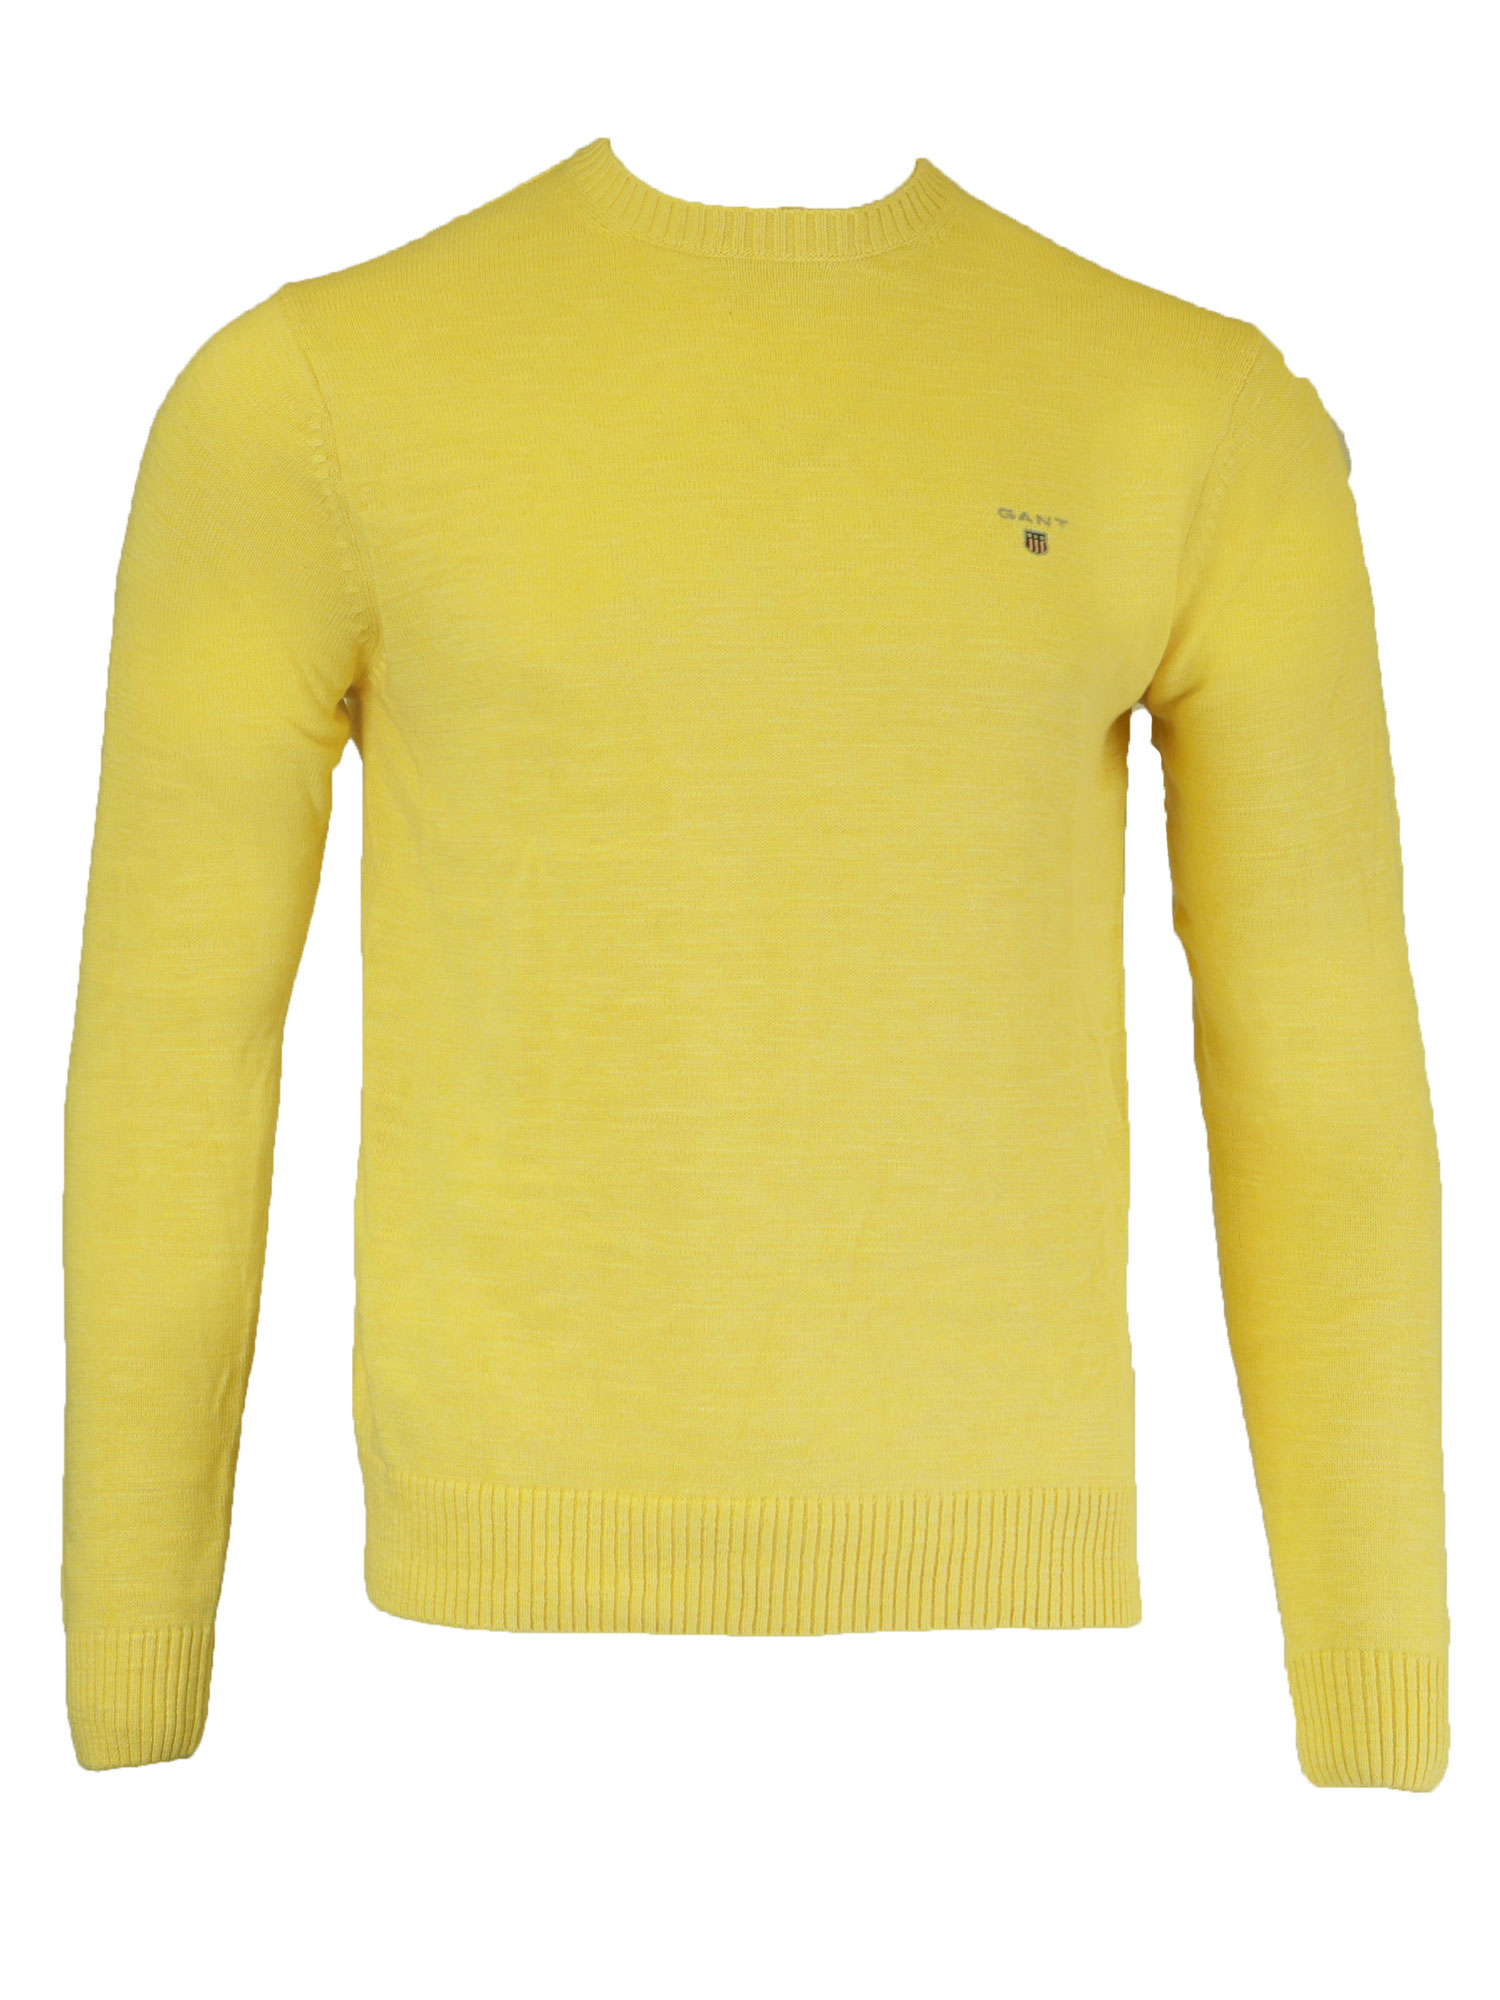 GANT Men's Light Yellow Natural Cotton Crew Neck Sweater 83051 Size M ...